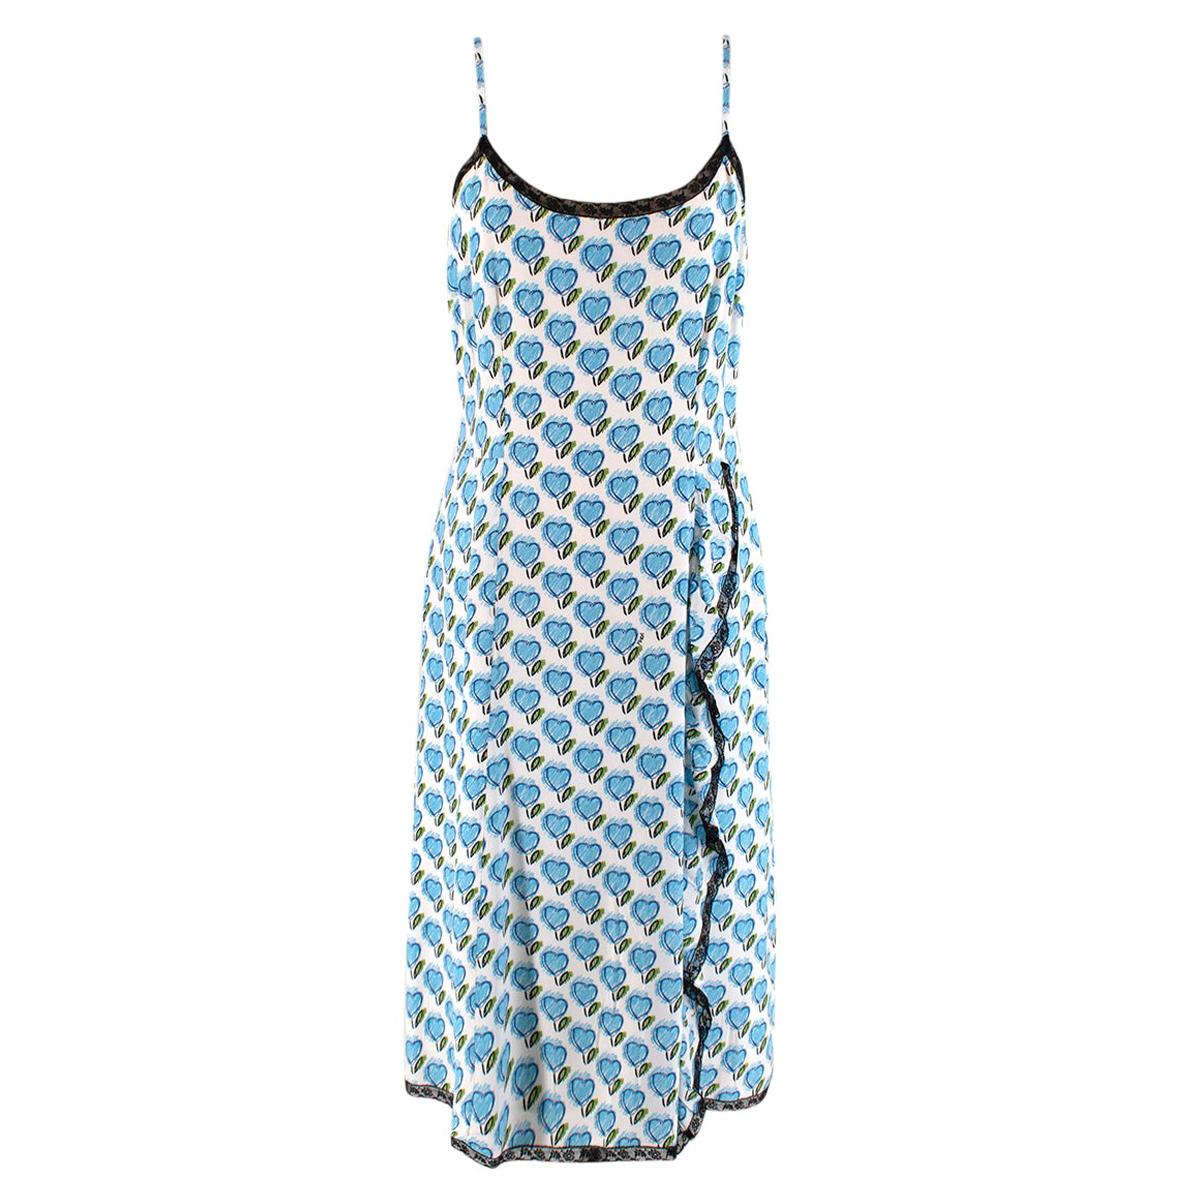  Prada White & Blue Hearts Print Lace Trim Cami Dress - Us size 8 For Sale